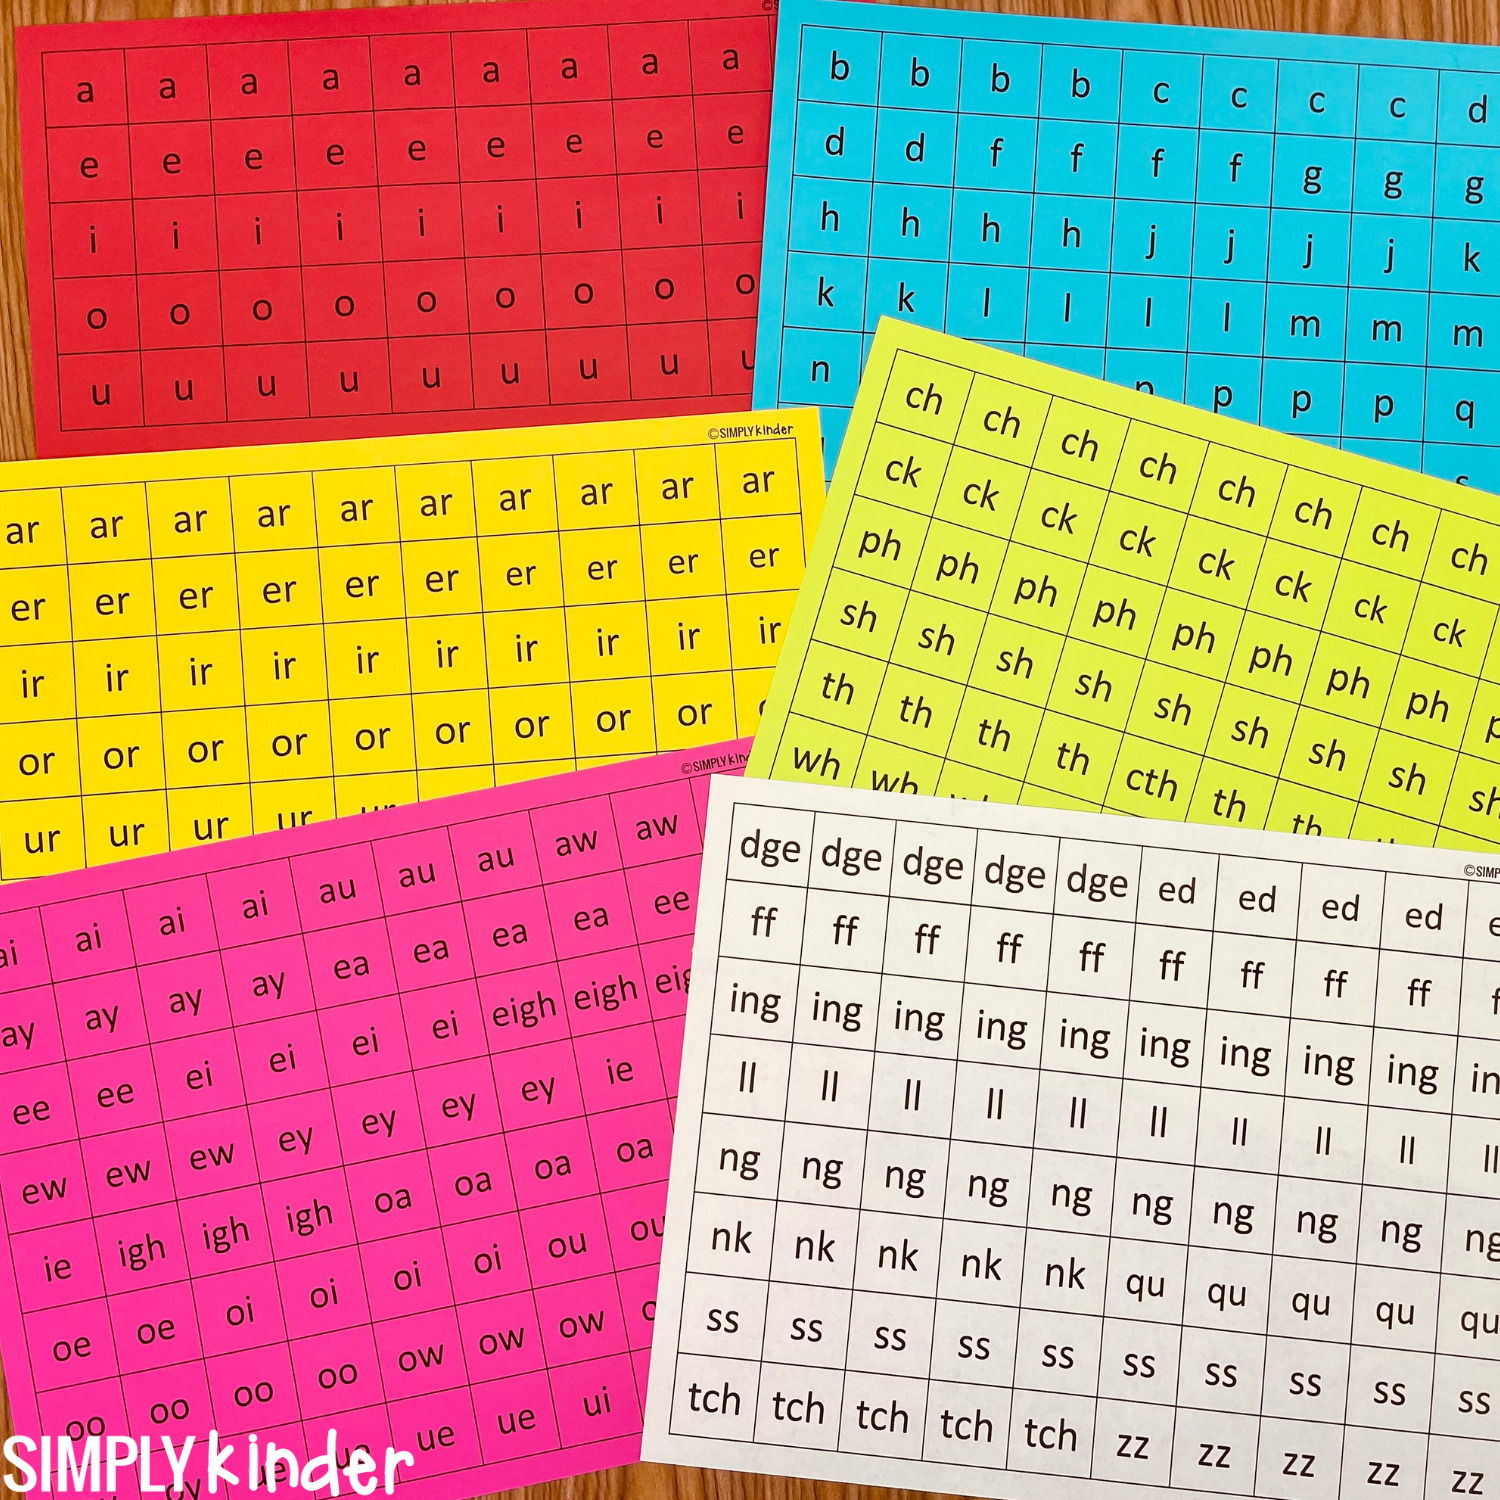 Letter Tile Activities For Kindergarten - Simply Kinder - Free Printable Alphabet Tiles